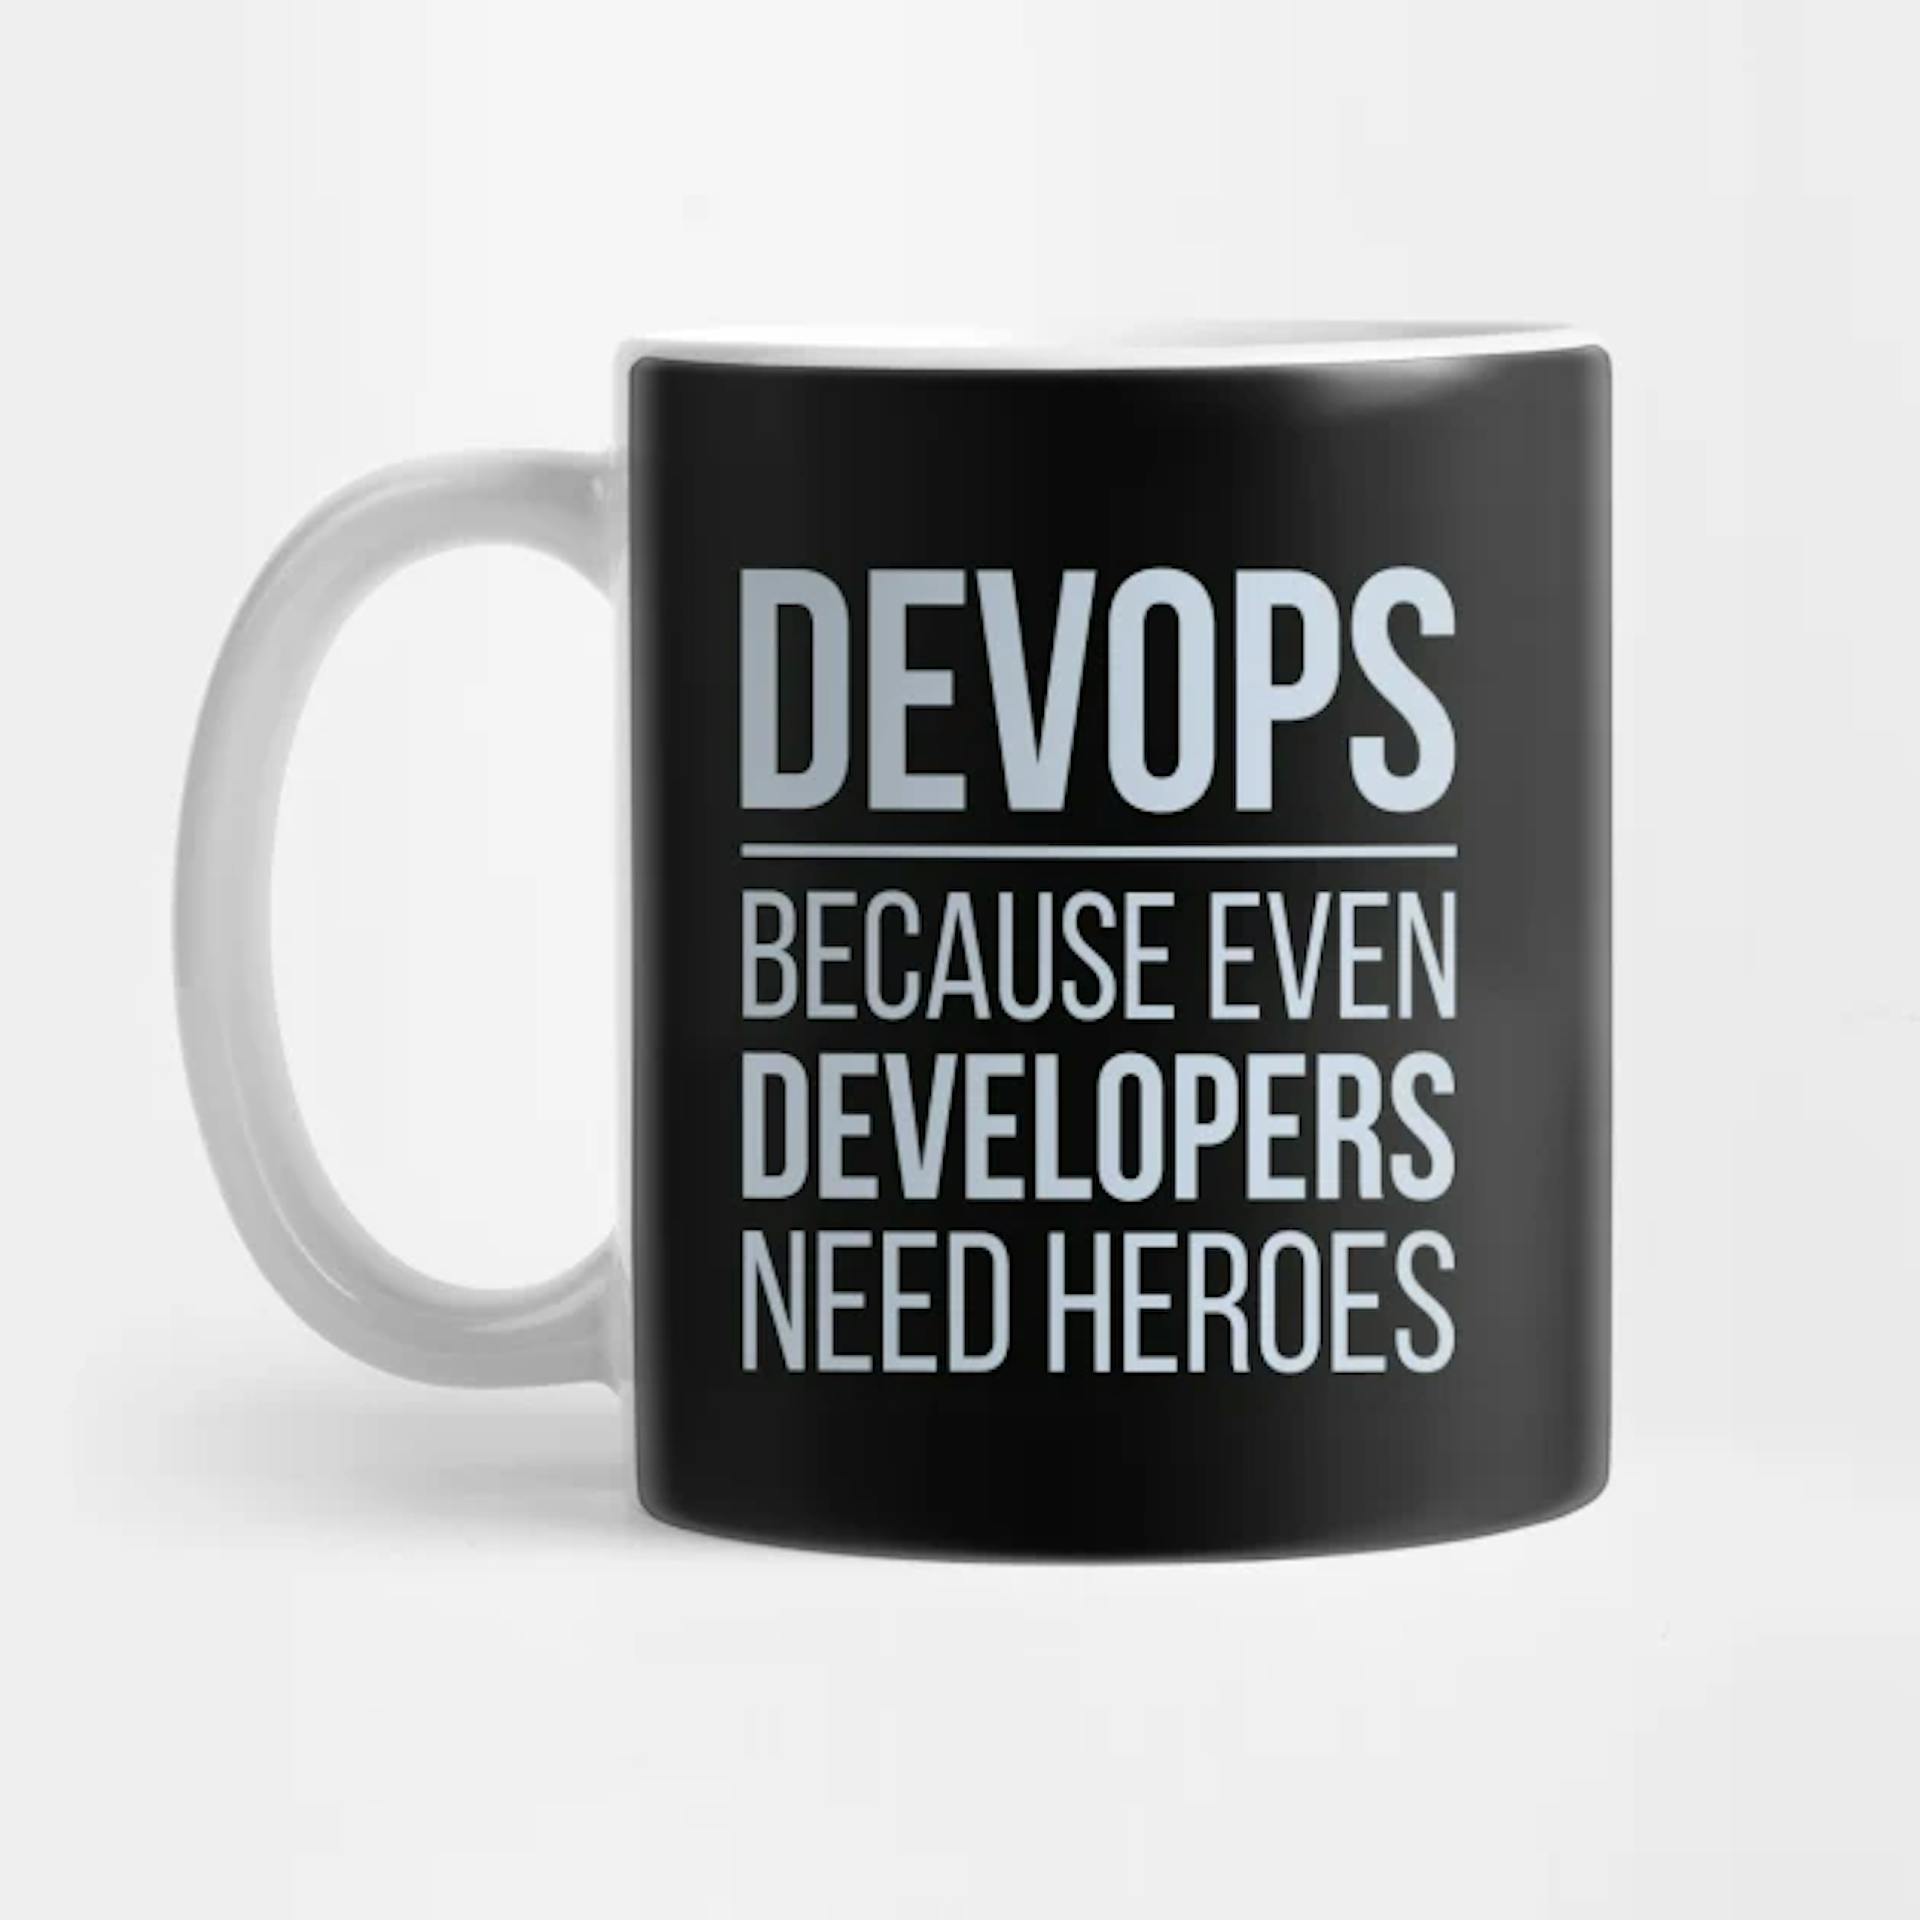 Photo Source: https://www.teepublic.com/mug/7864928-developer-devops-because-even-developers-need-hero